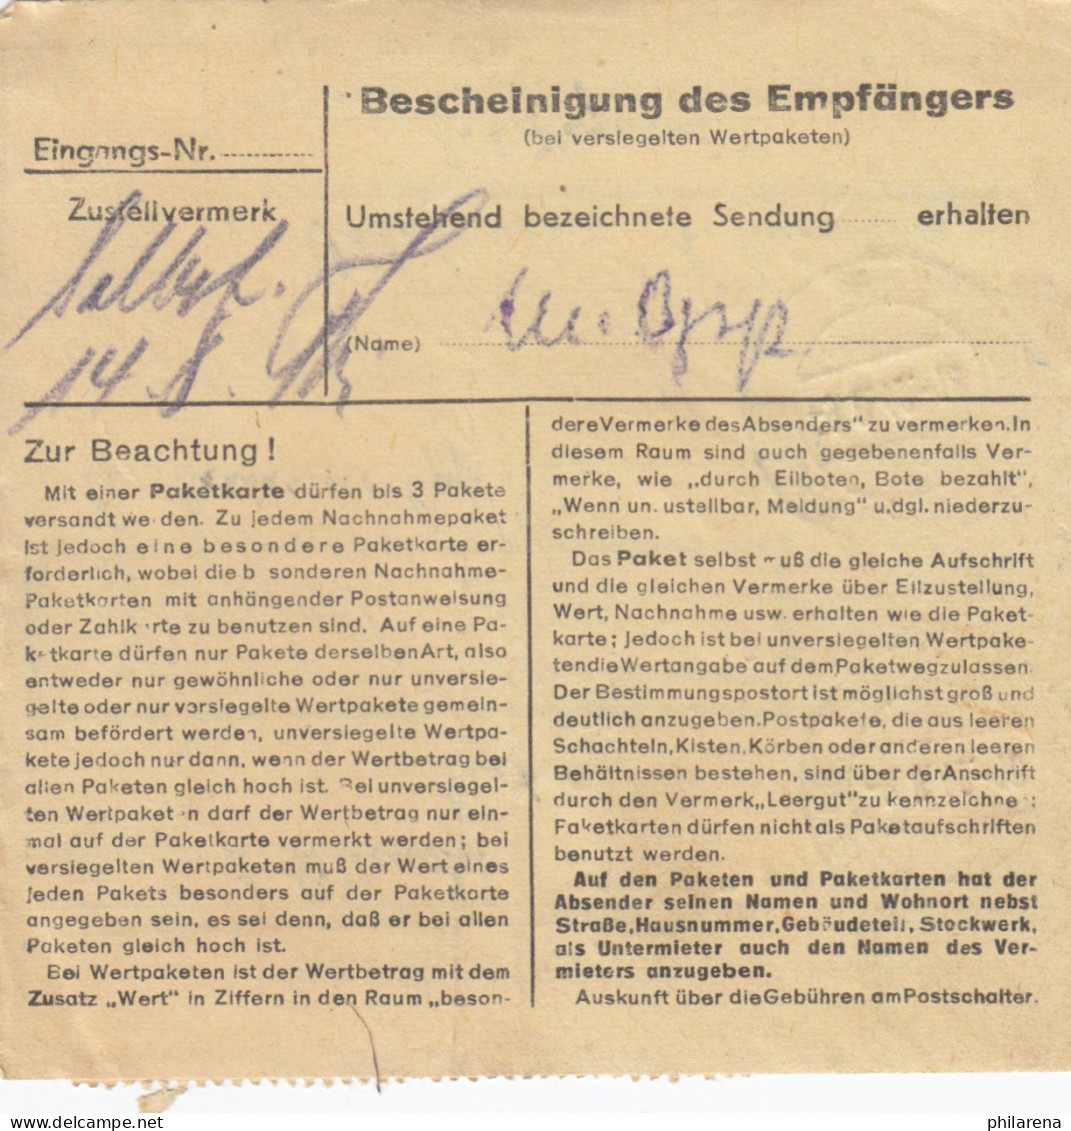 BiZone Paketkarte 1948: Graben Kr. Karlsruhe Nach Ottobrunn - Covers & Documents